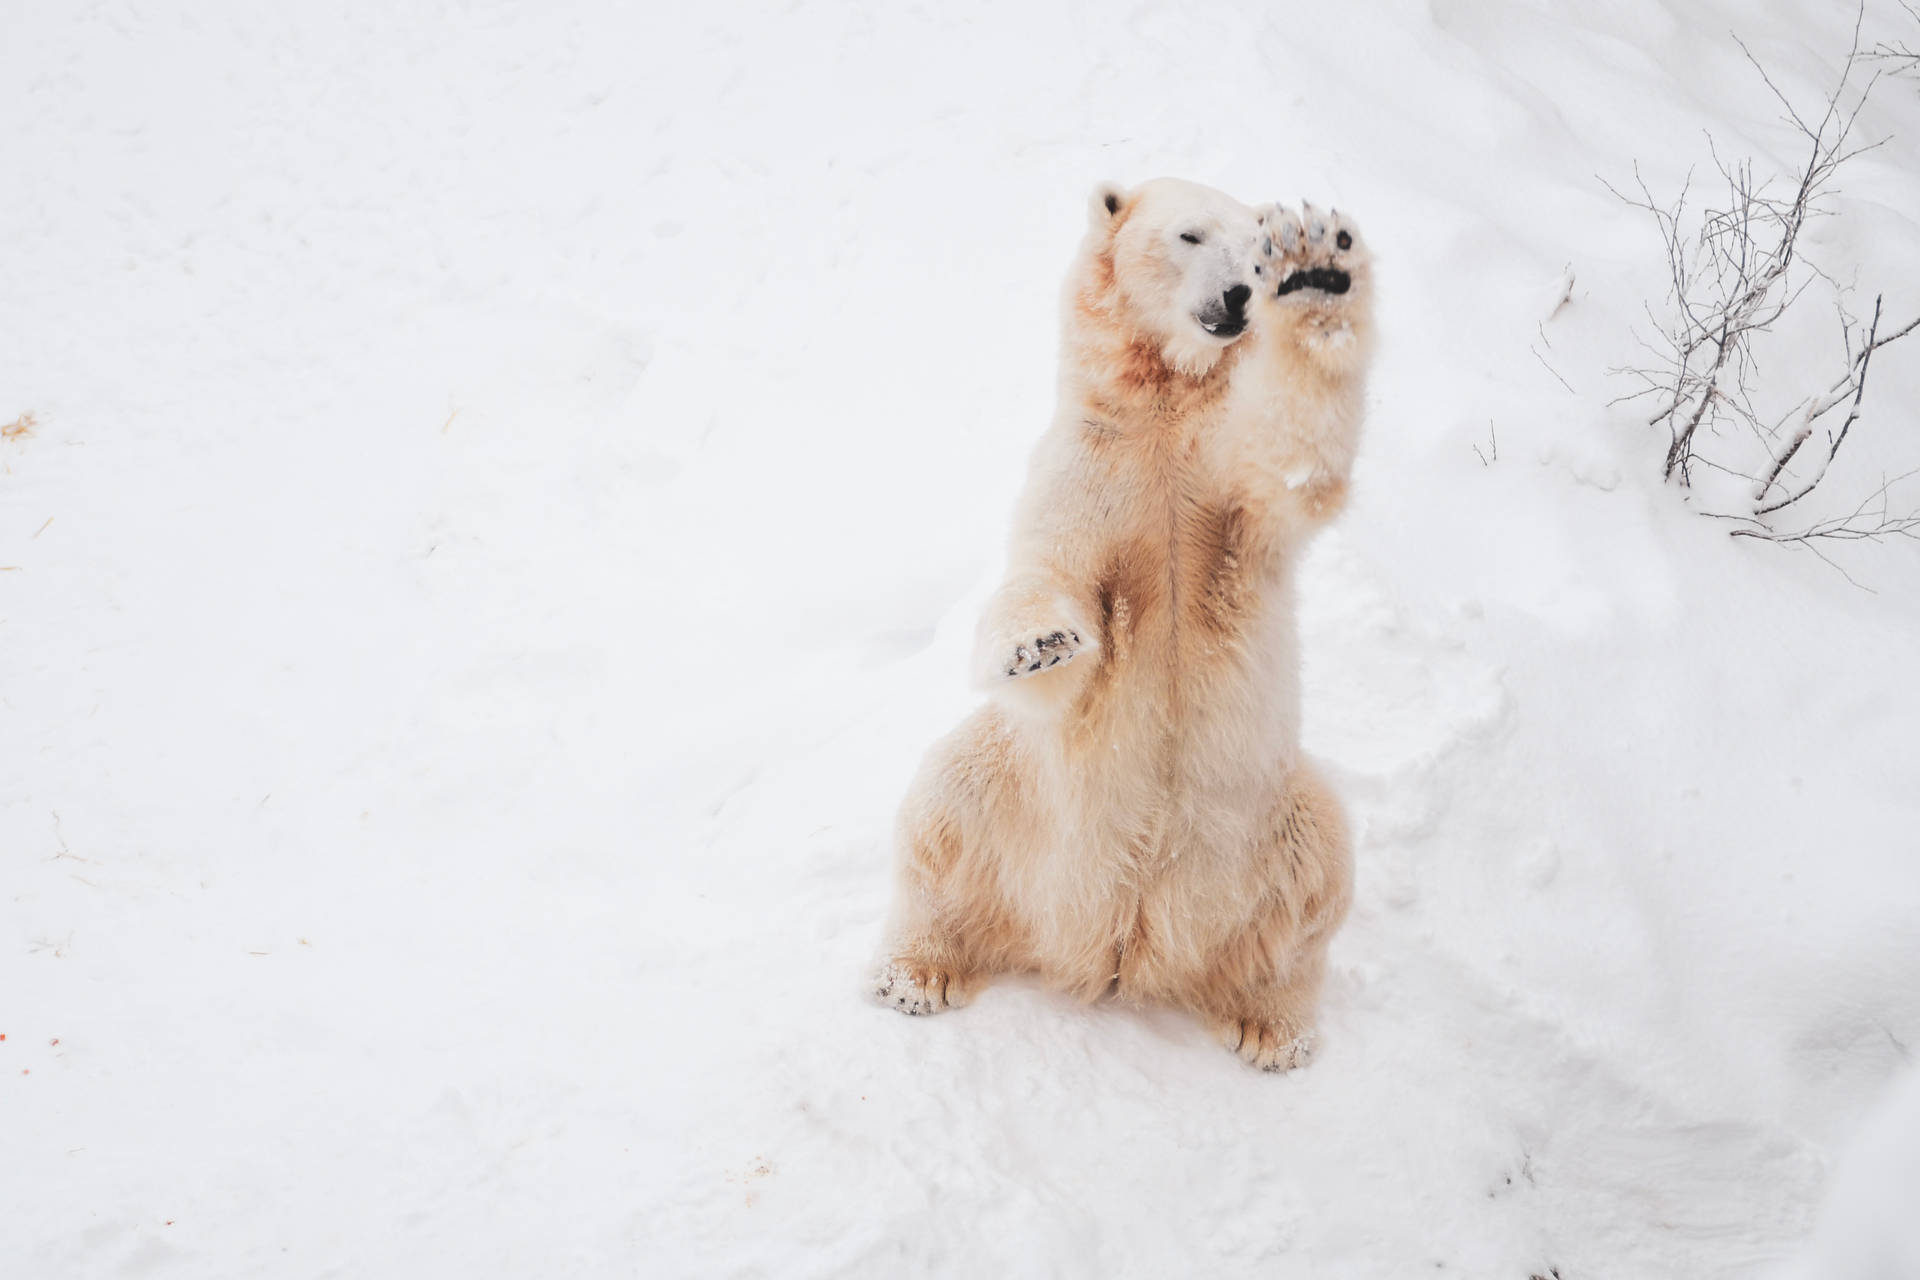 Cute Polar Bear In Snow